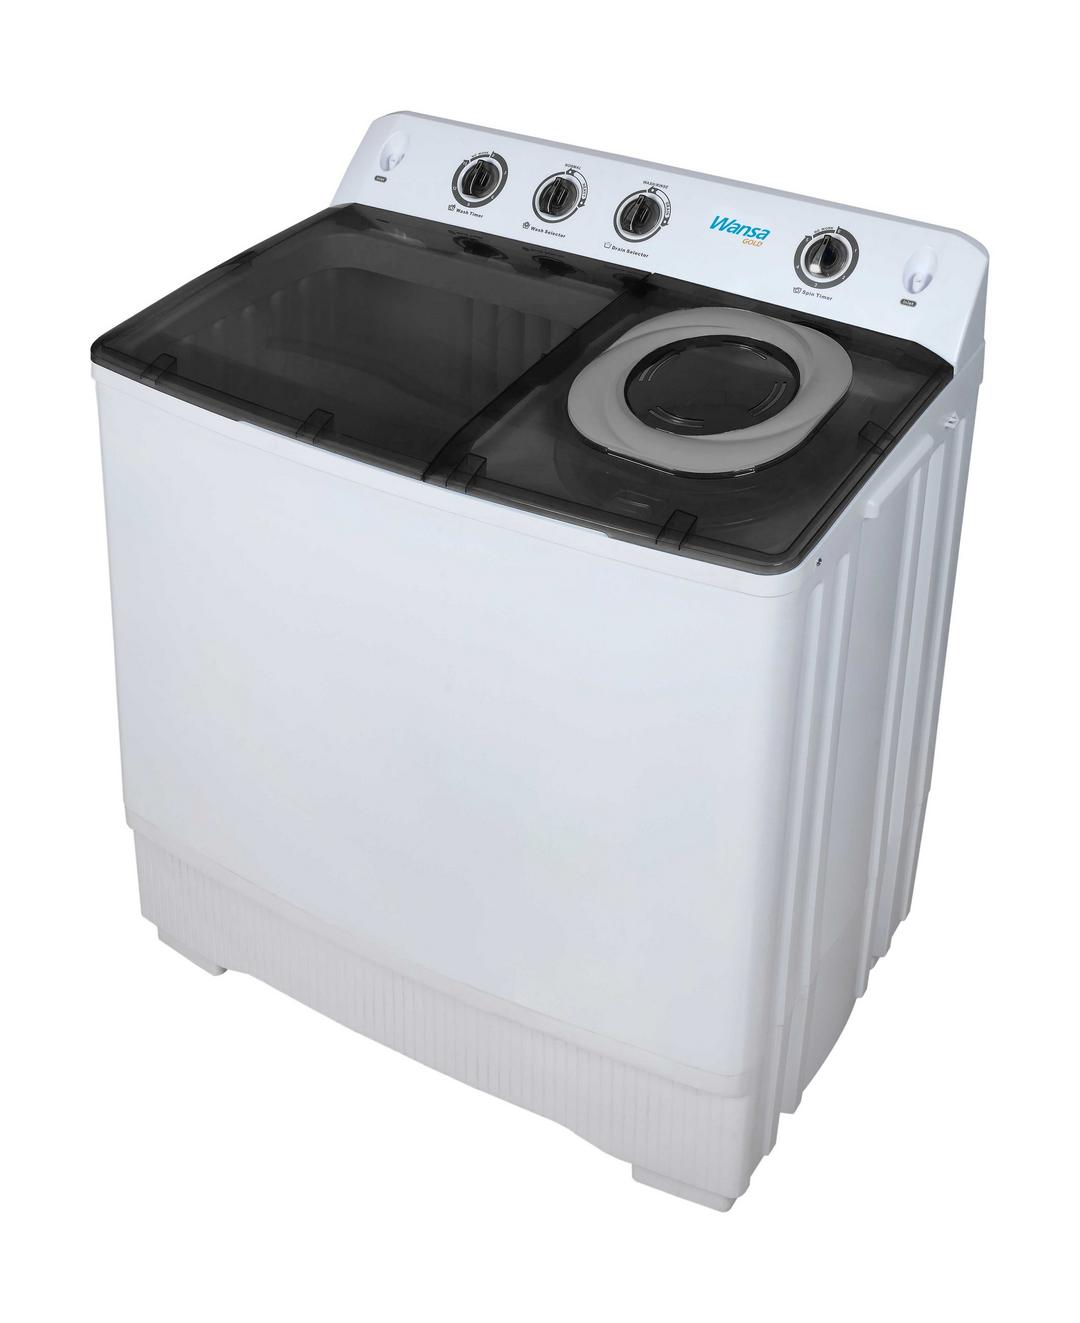 Wansa Gold 14Kg Twin Tub Washing Machine (WGTT14-T4BLKWH-C10)